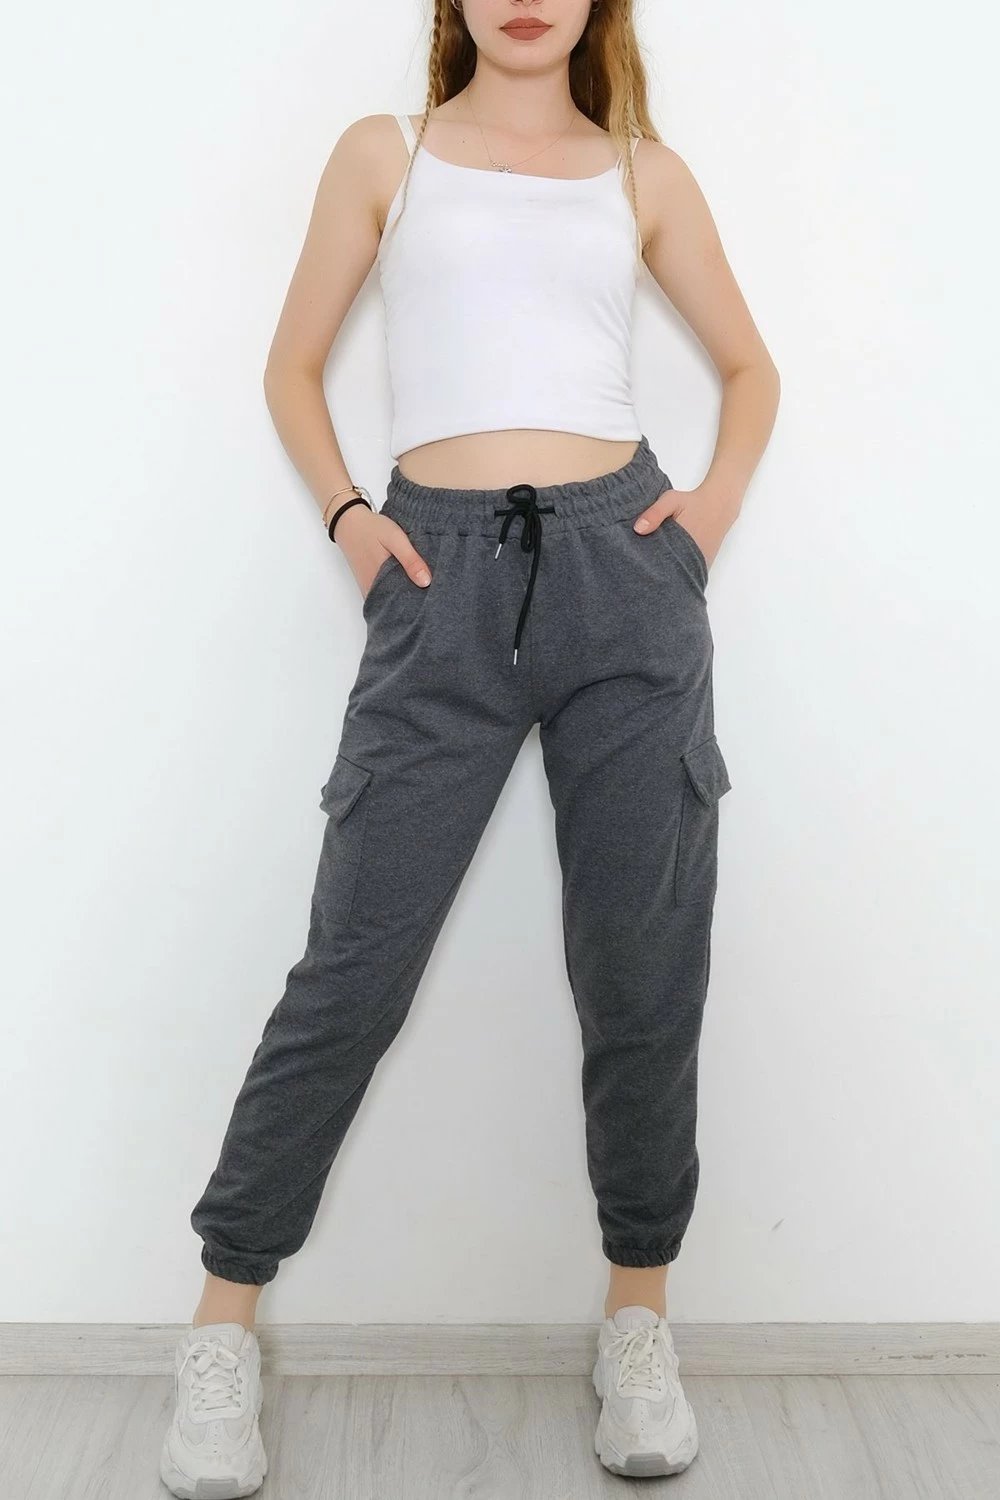 Pantallona sportive DBK Design by Kea, për femra, karışık